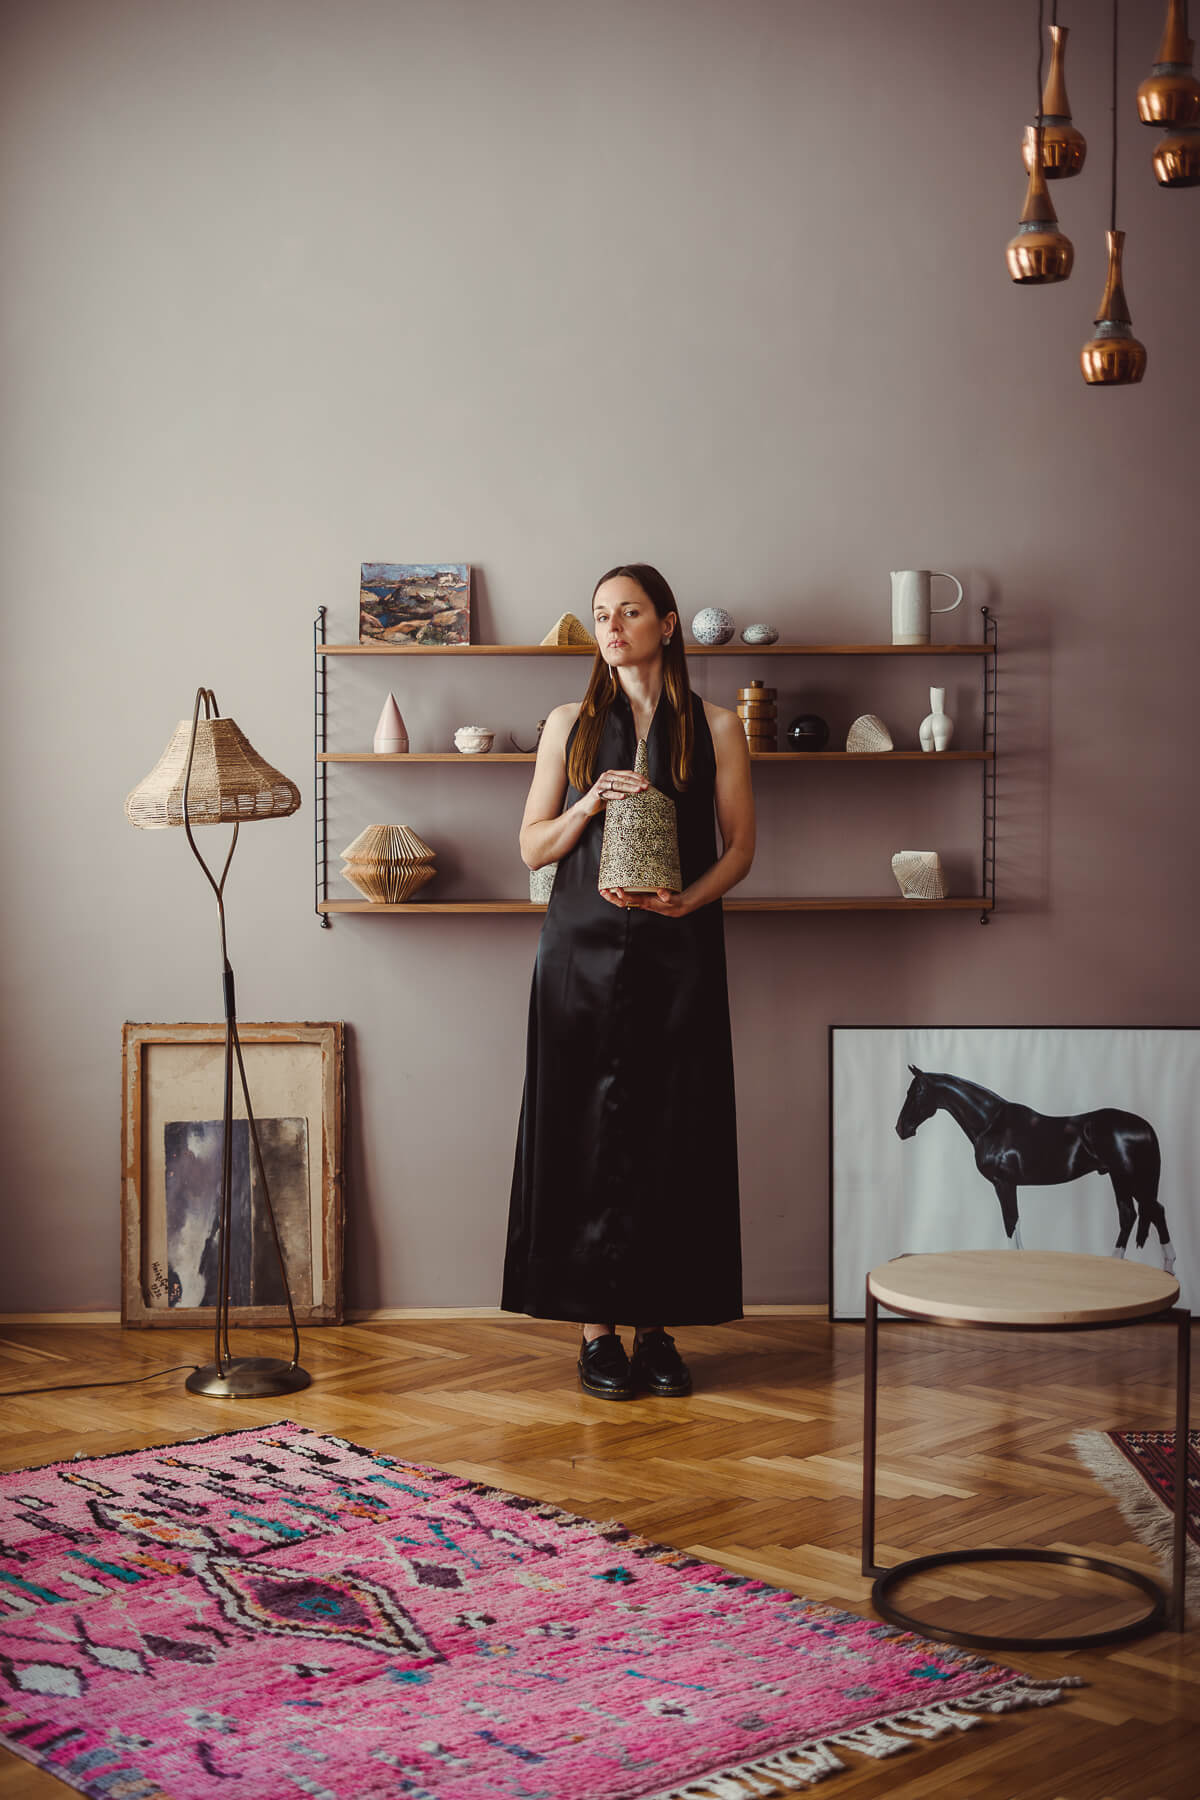 Evgeniia Kazarezova „Zheni studio“ Keramikkunst Keramikobjekte – diesellerie.com